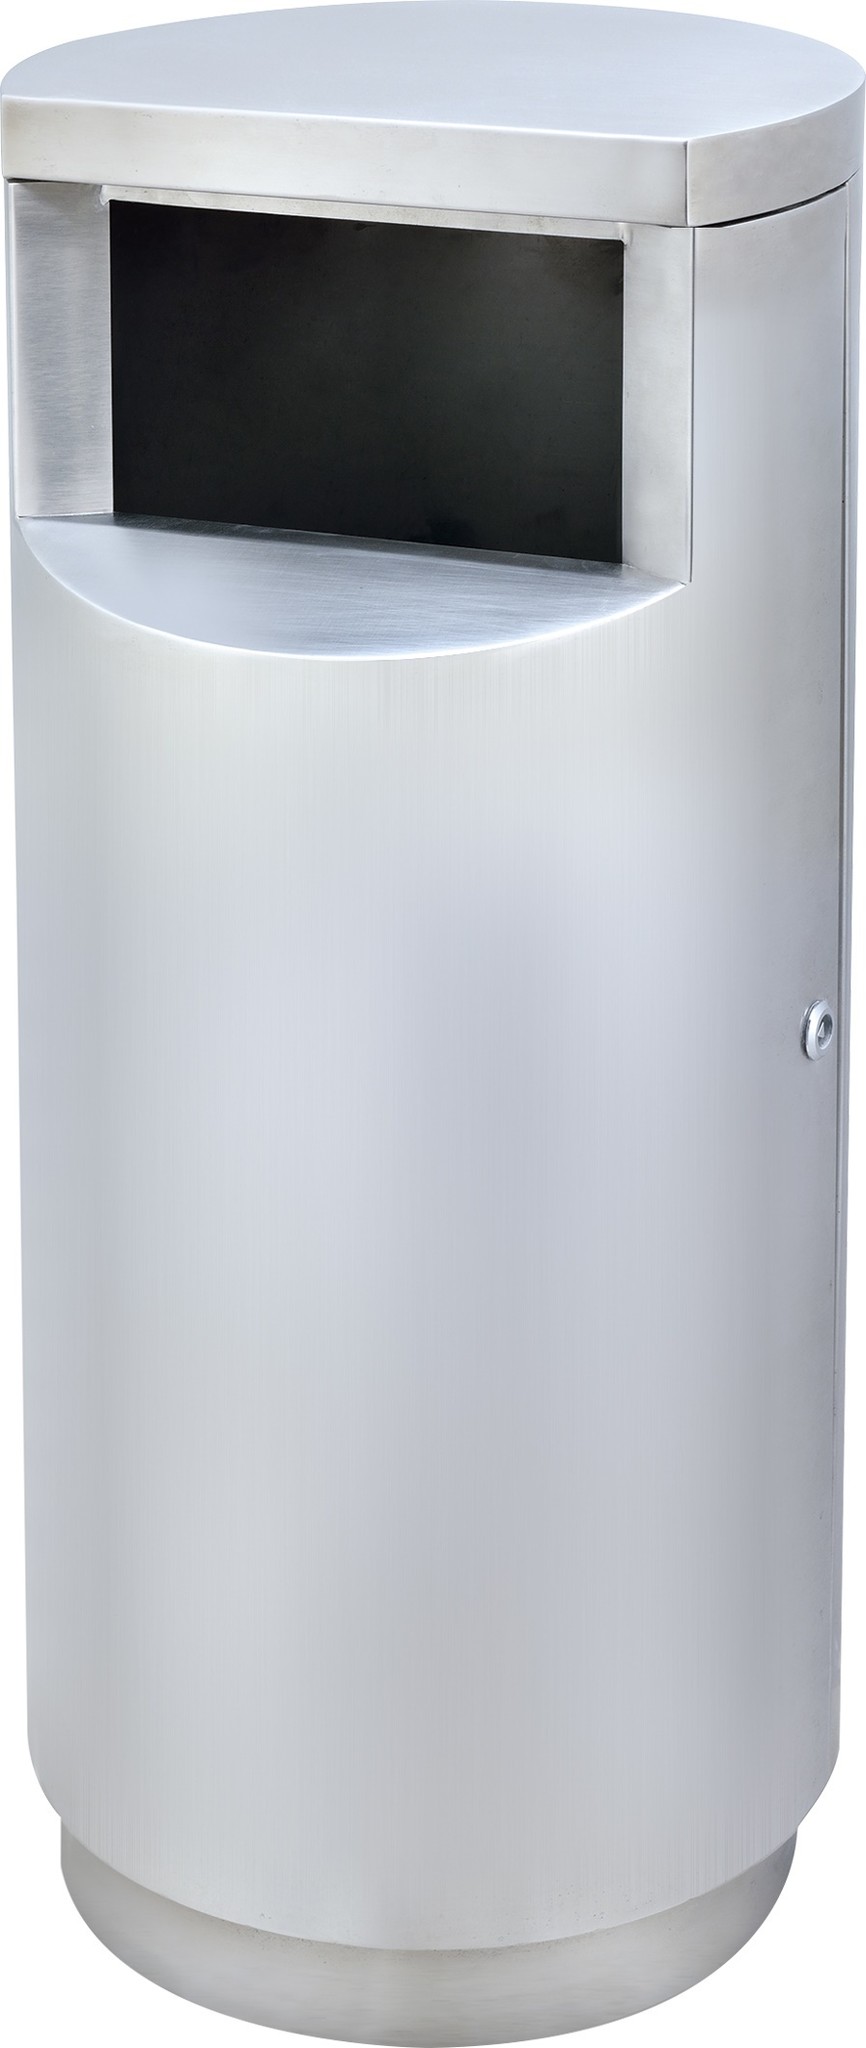 Abfallbehälter Edelstahl | 40 Liter | Ø400x(H)900mm